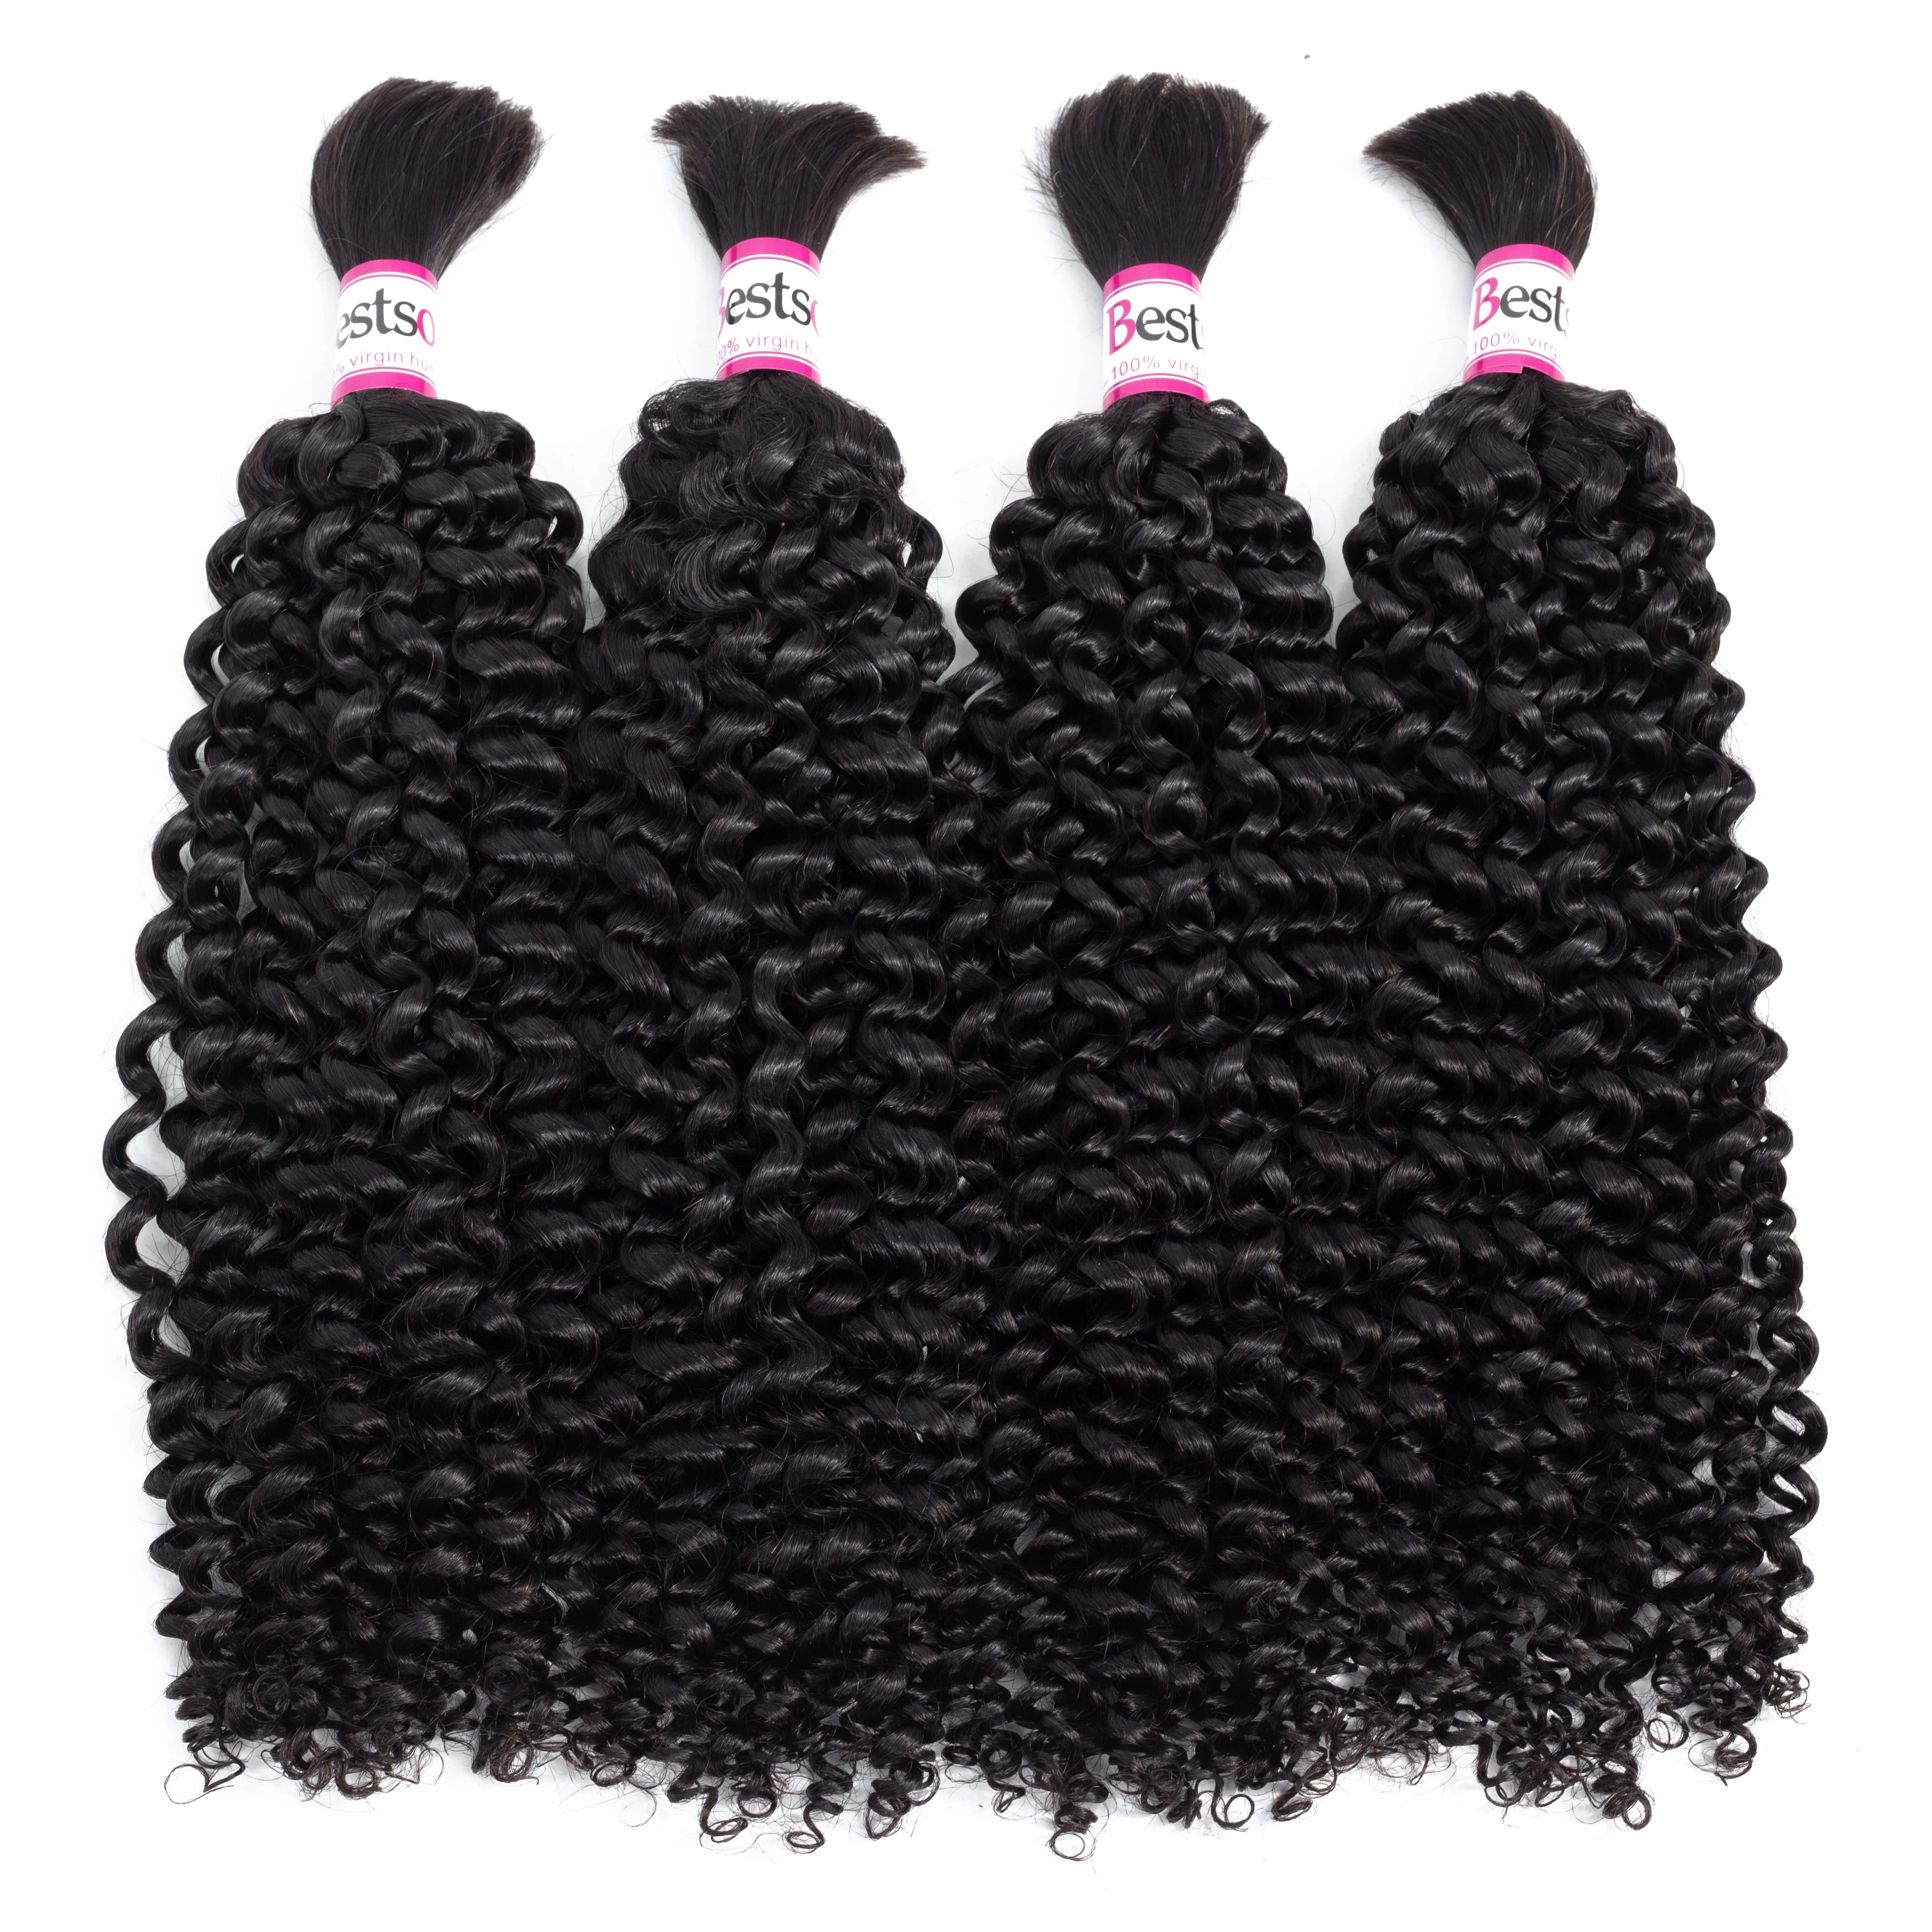 Bestsojoy Unprocessed virgin remy human hair bundles brazilian hair bouncy curly wet wave Jet black 8-26inch free shipping